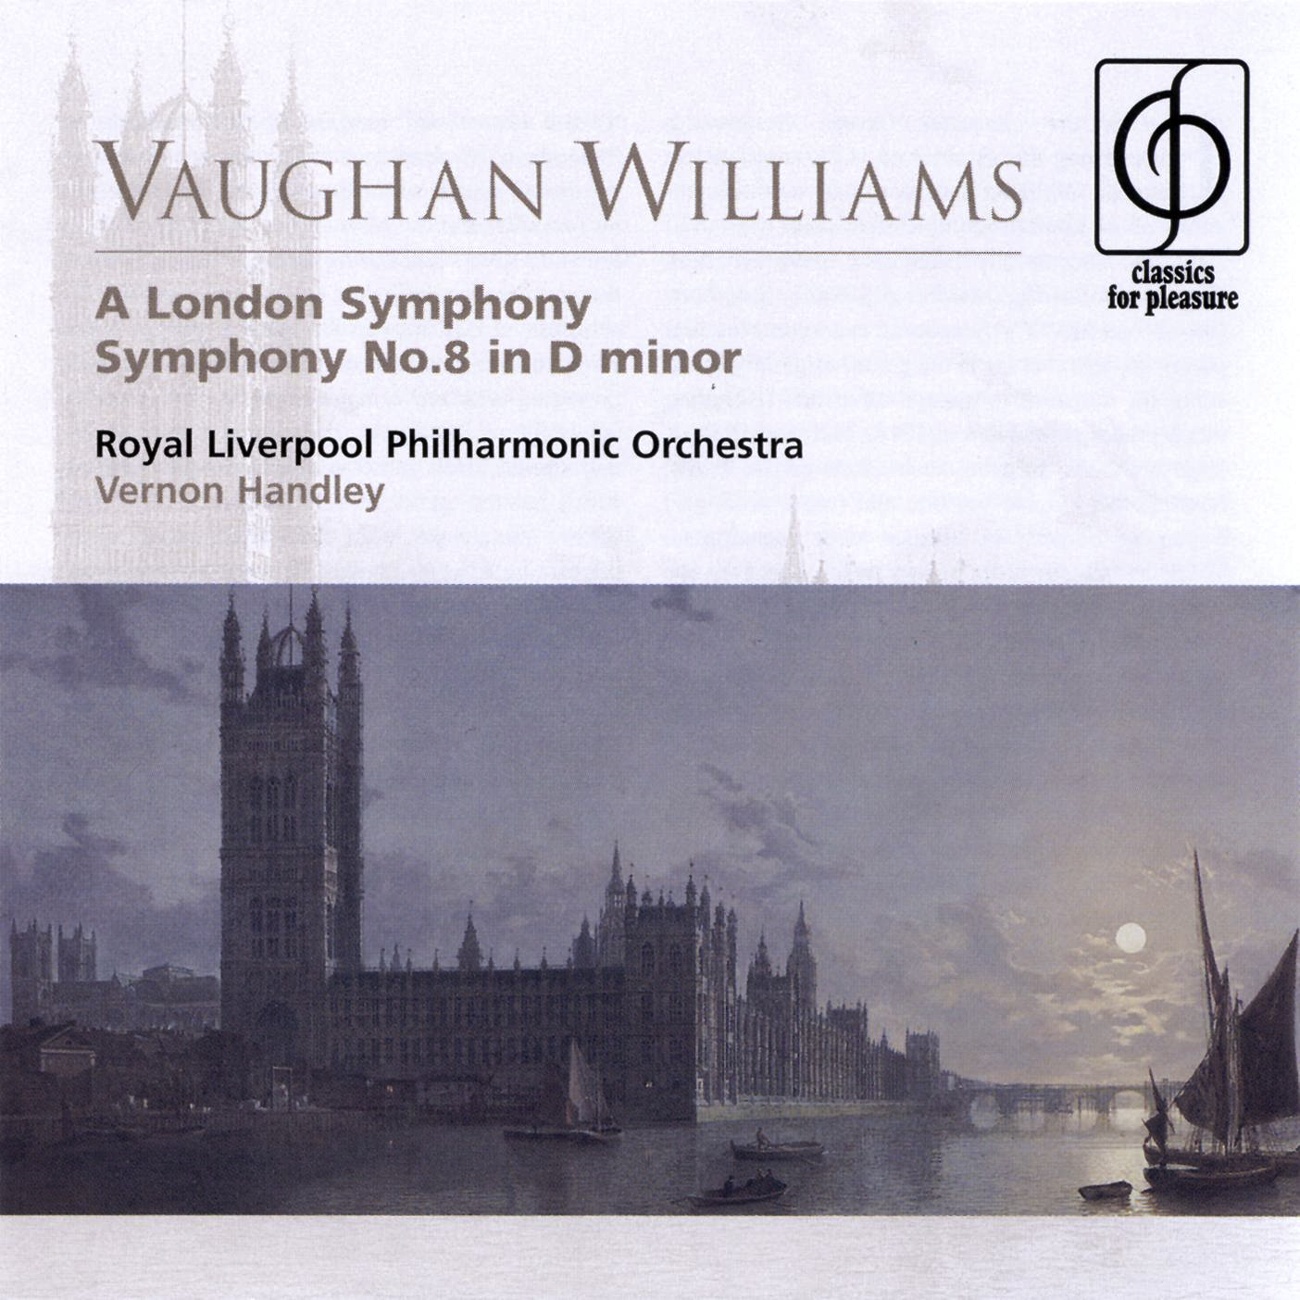 Vaughan Williams A London Symphony, Symphony No.8 in D minor